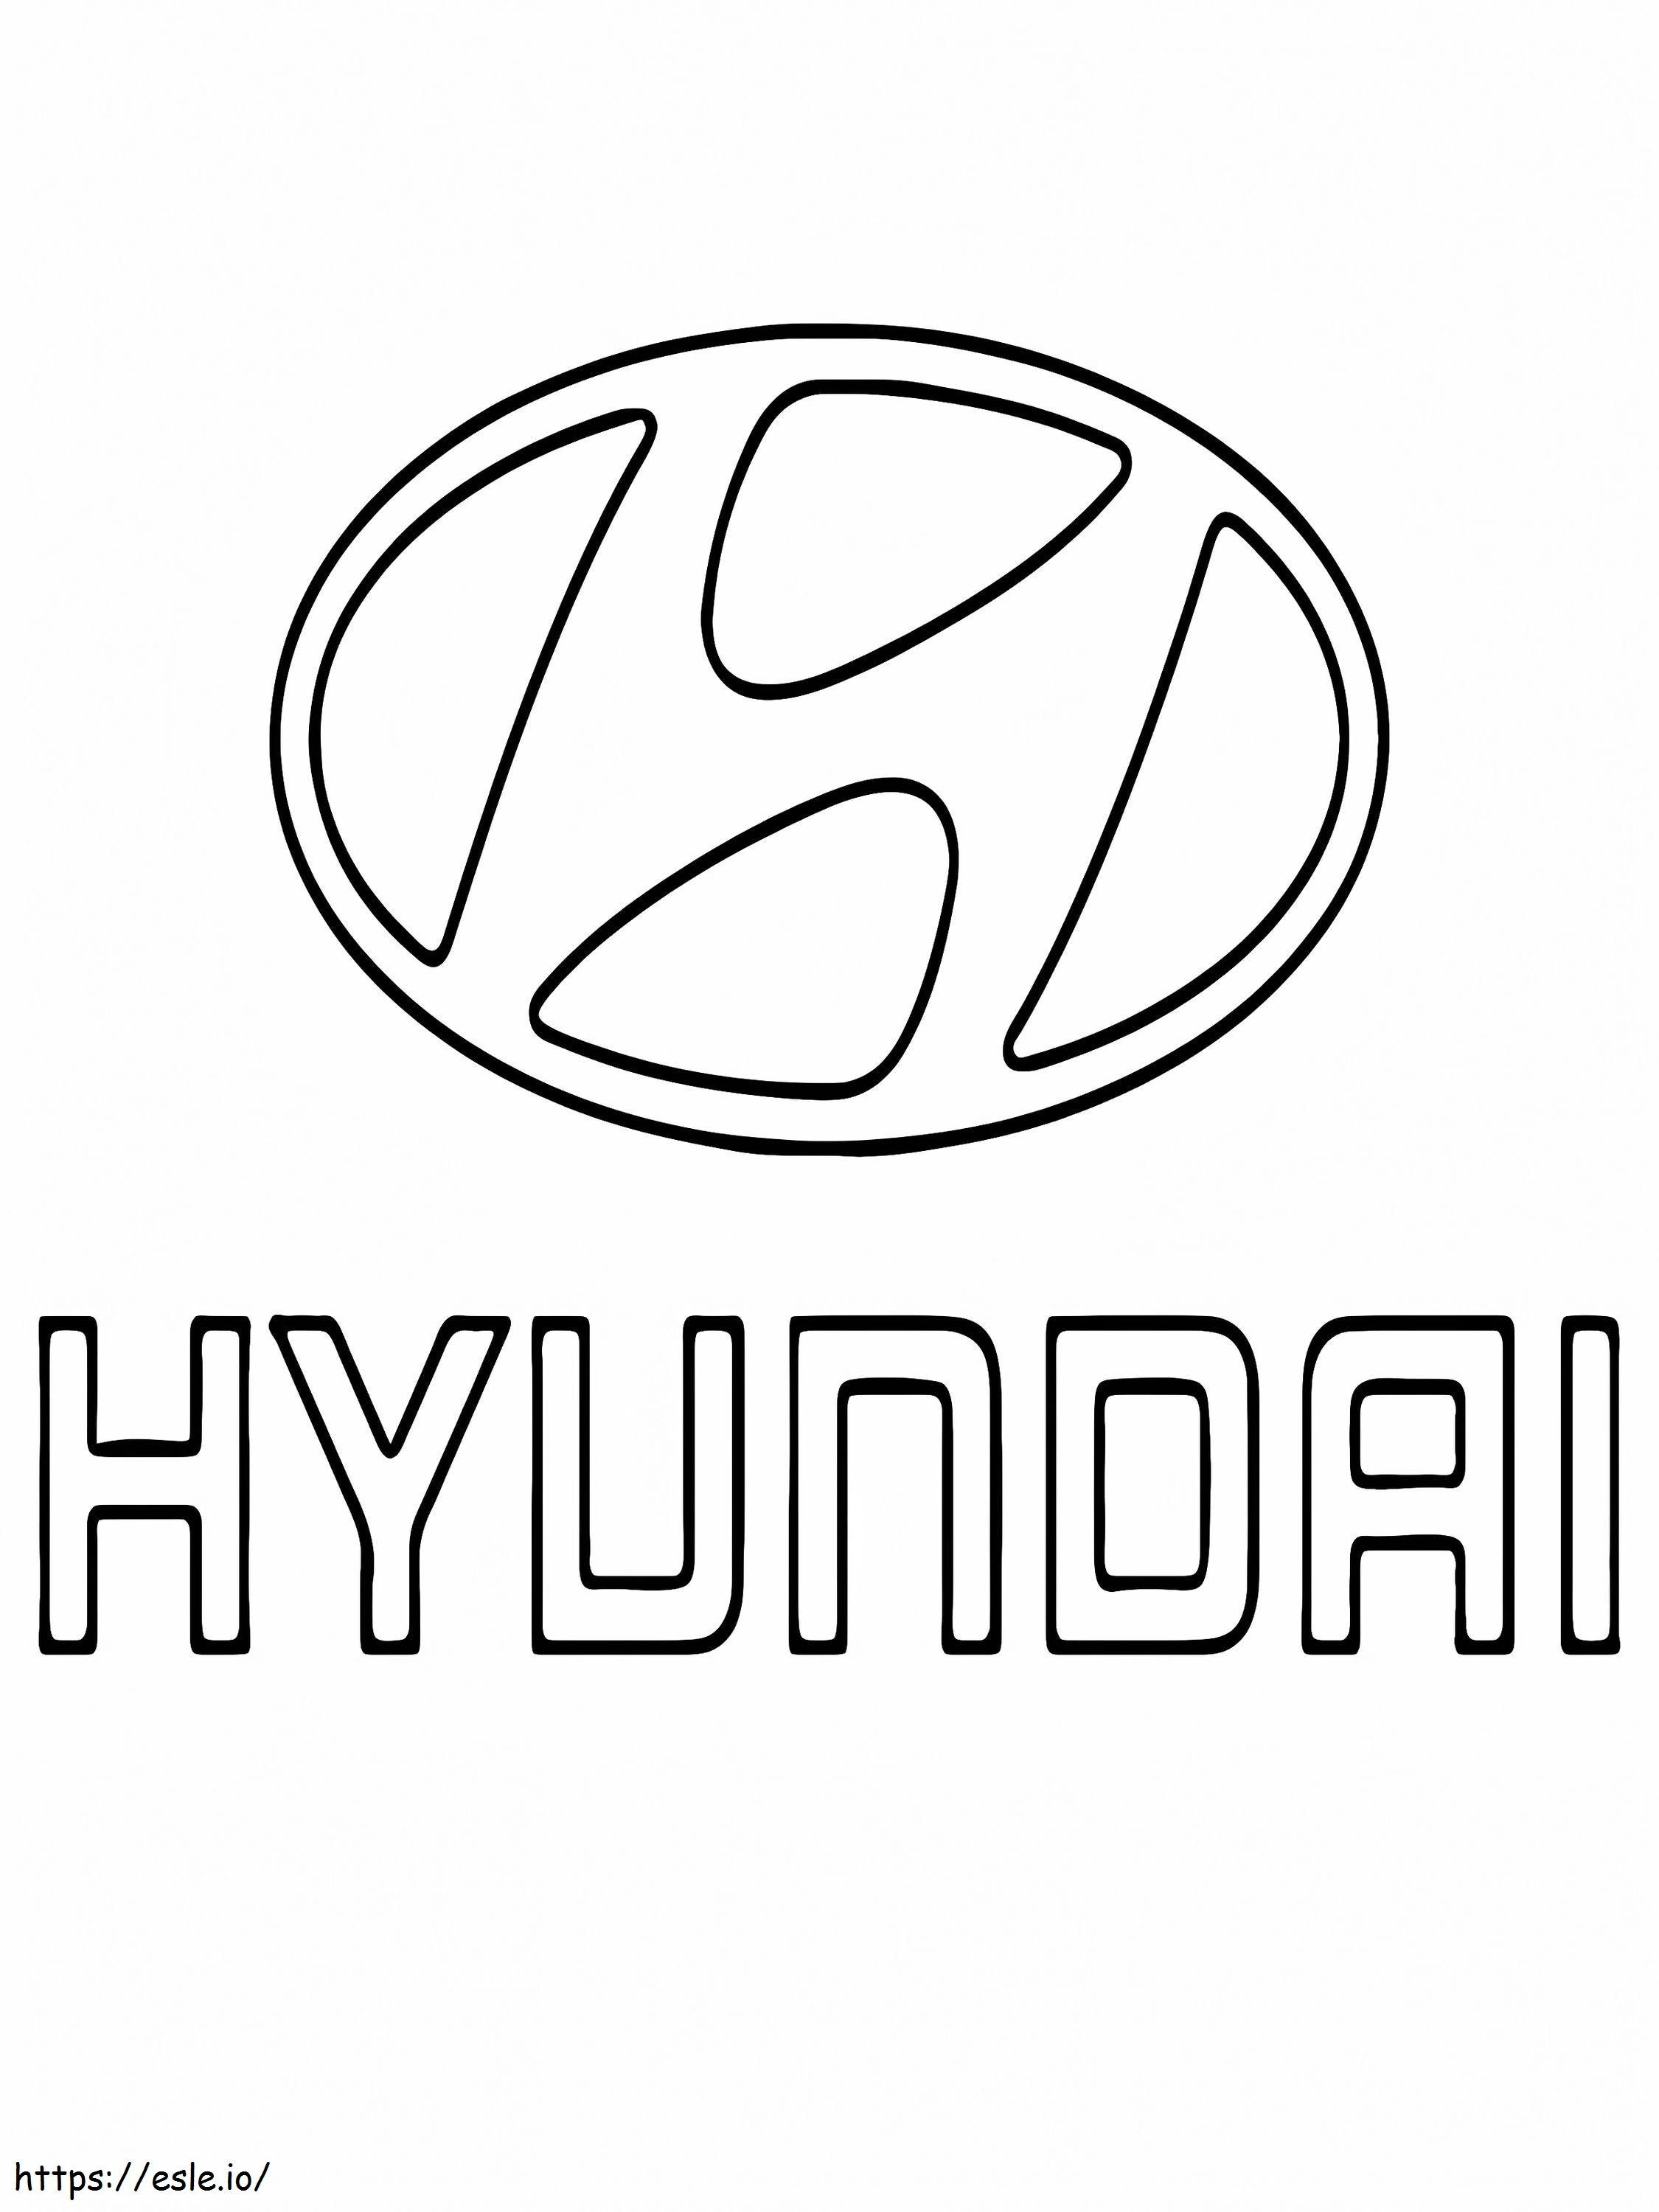 Hyundai-auto-logo kleurplaat kleurplaat